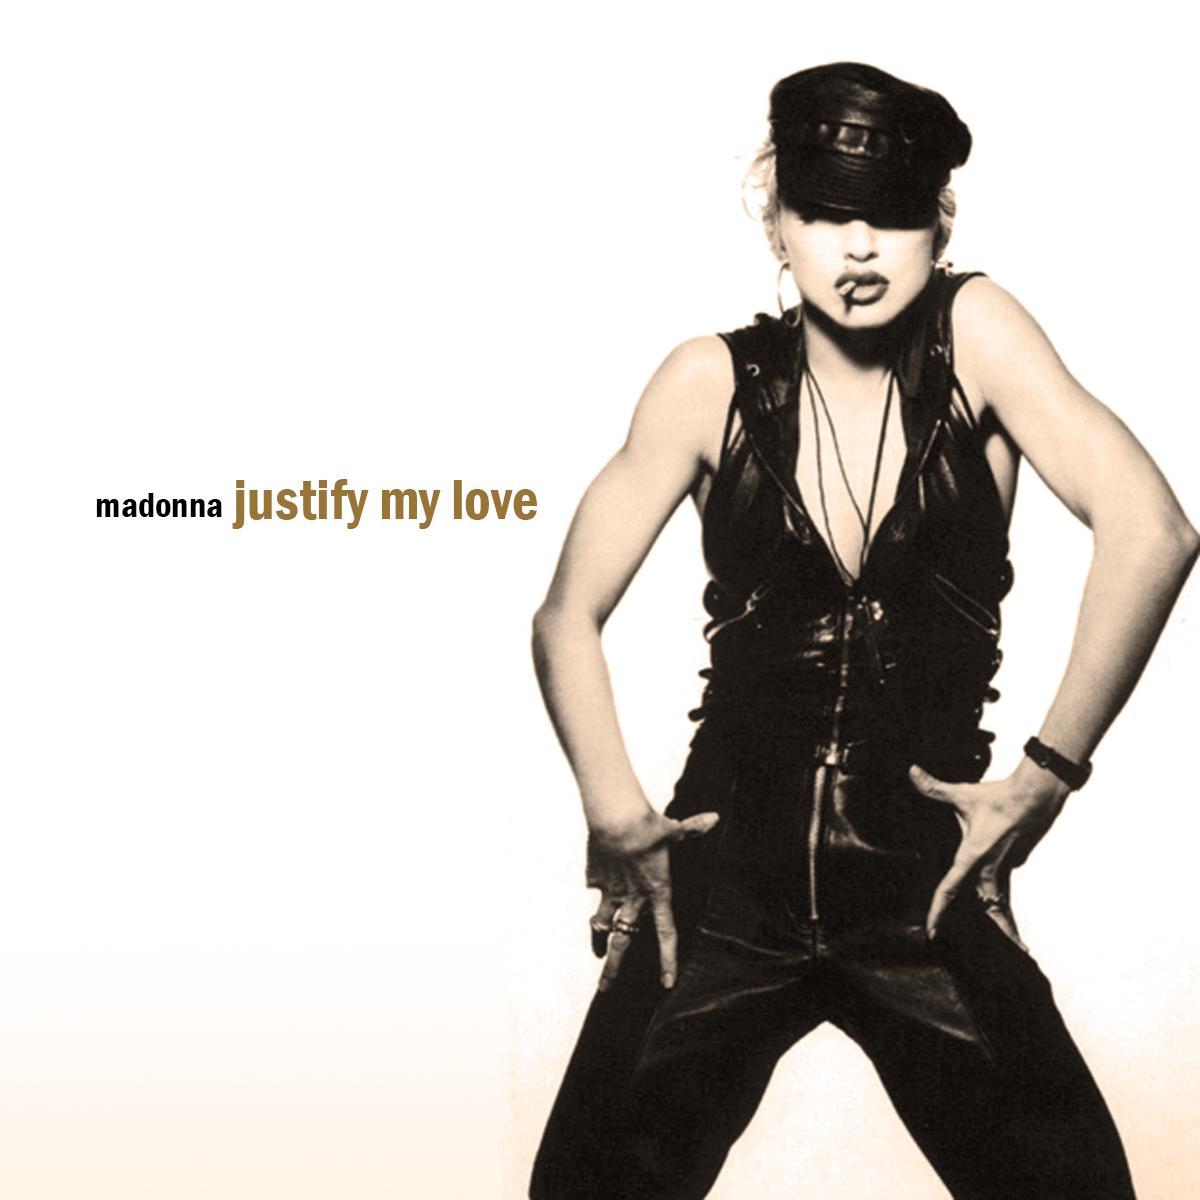 Madonna_Justify_My_Love_Music_Video-626763869-large.jpg